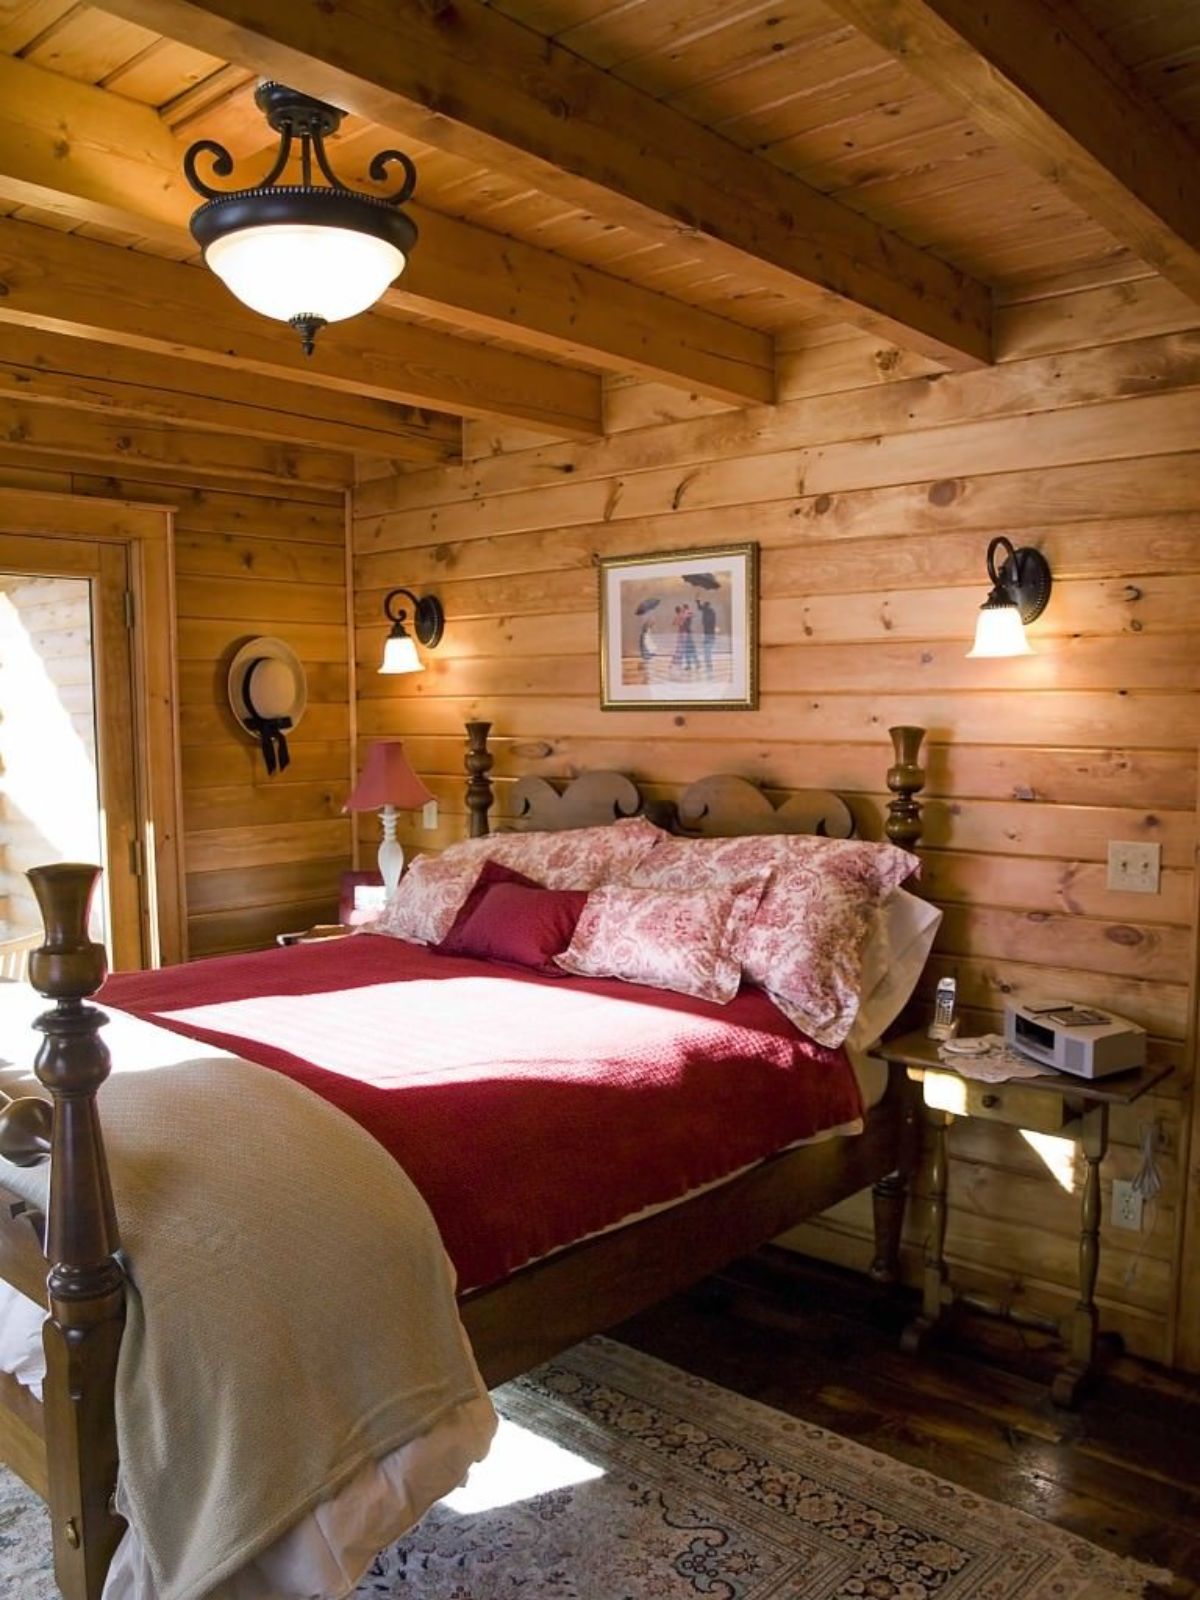 wood bedframe with maroon blanket against wood wall